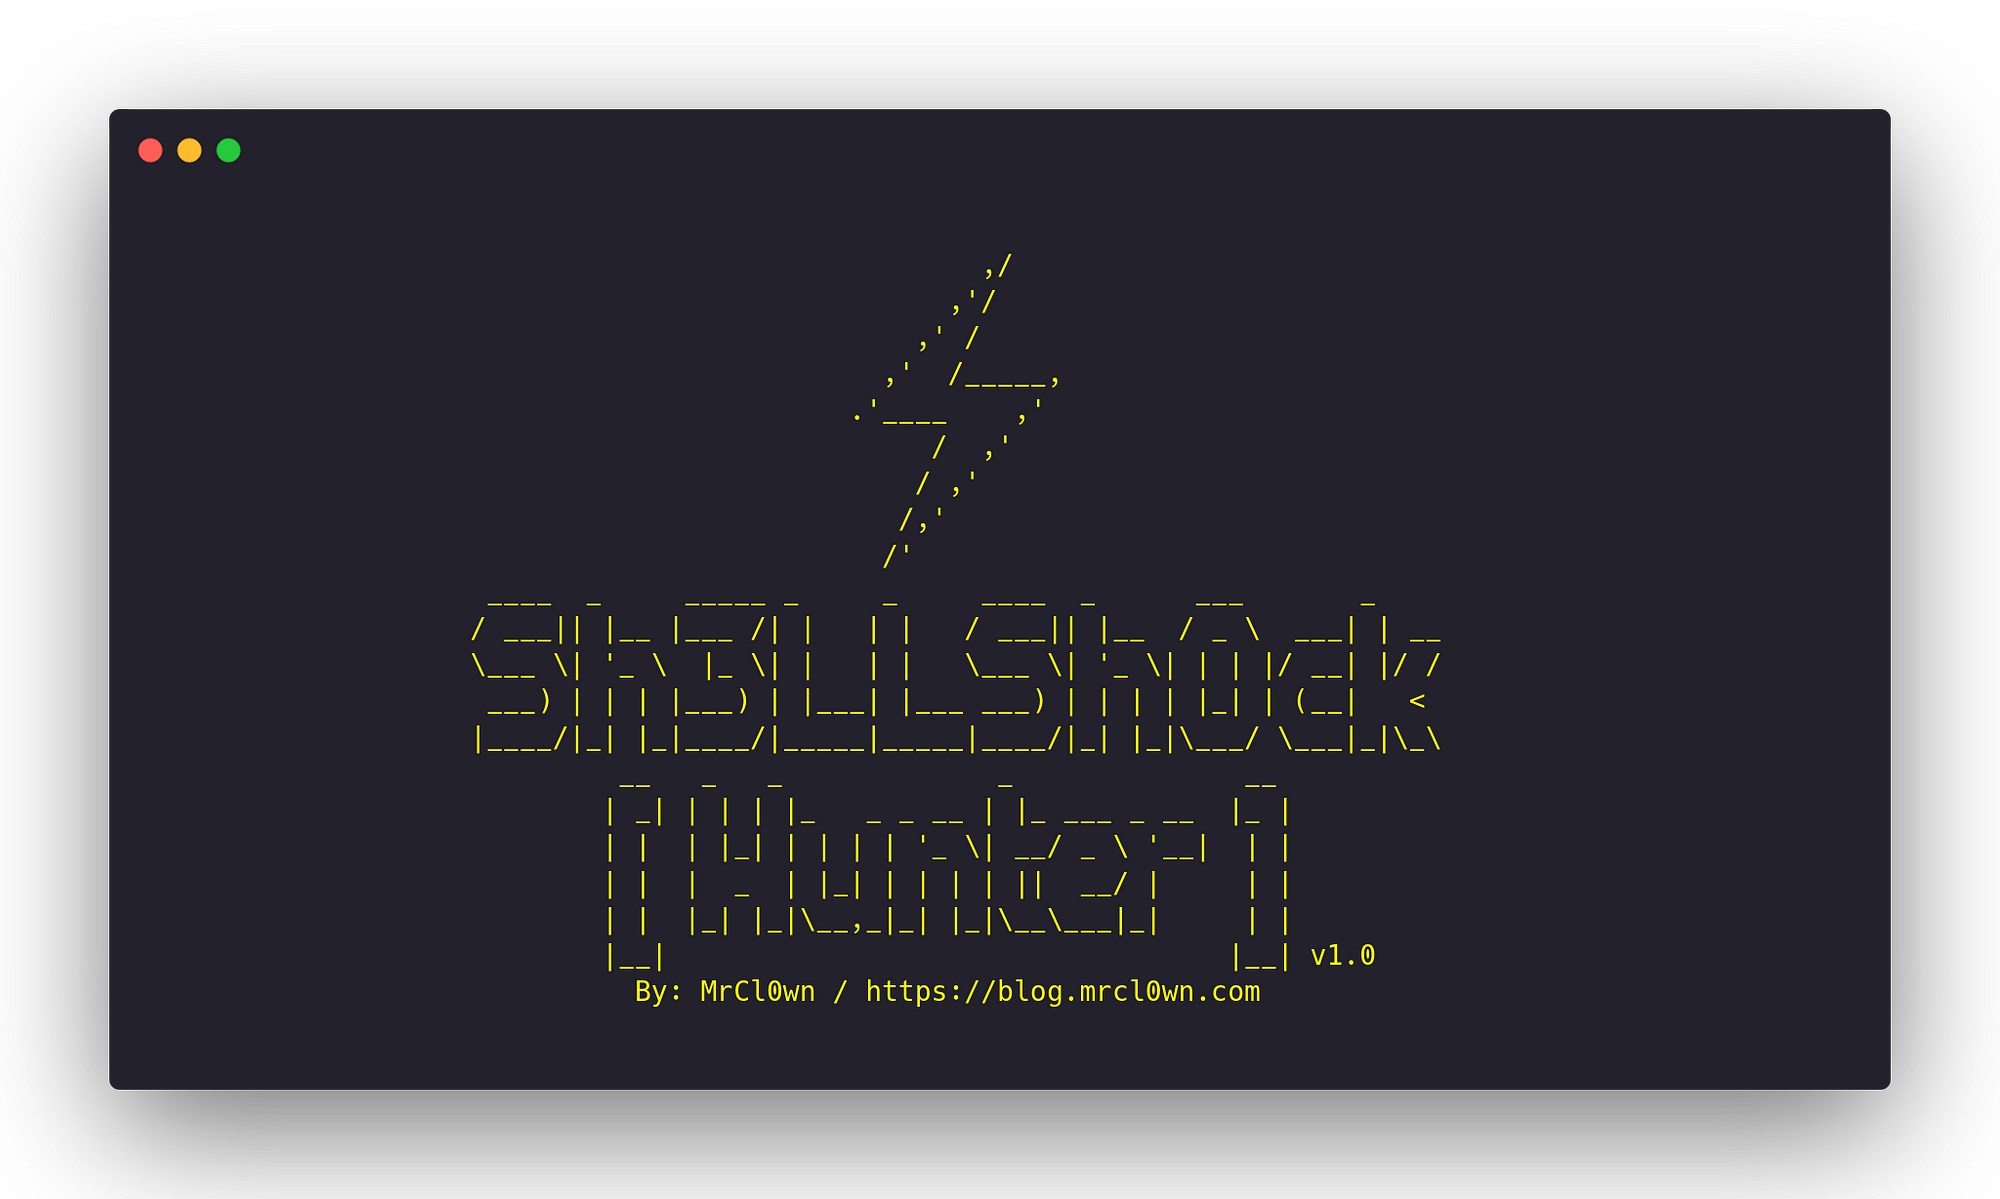 Shellshock (software bug) - Wikipedia